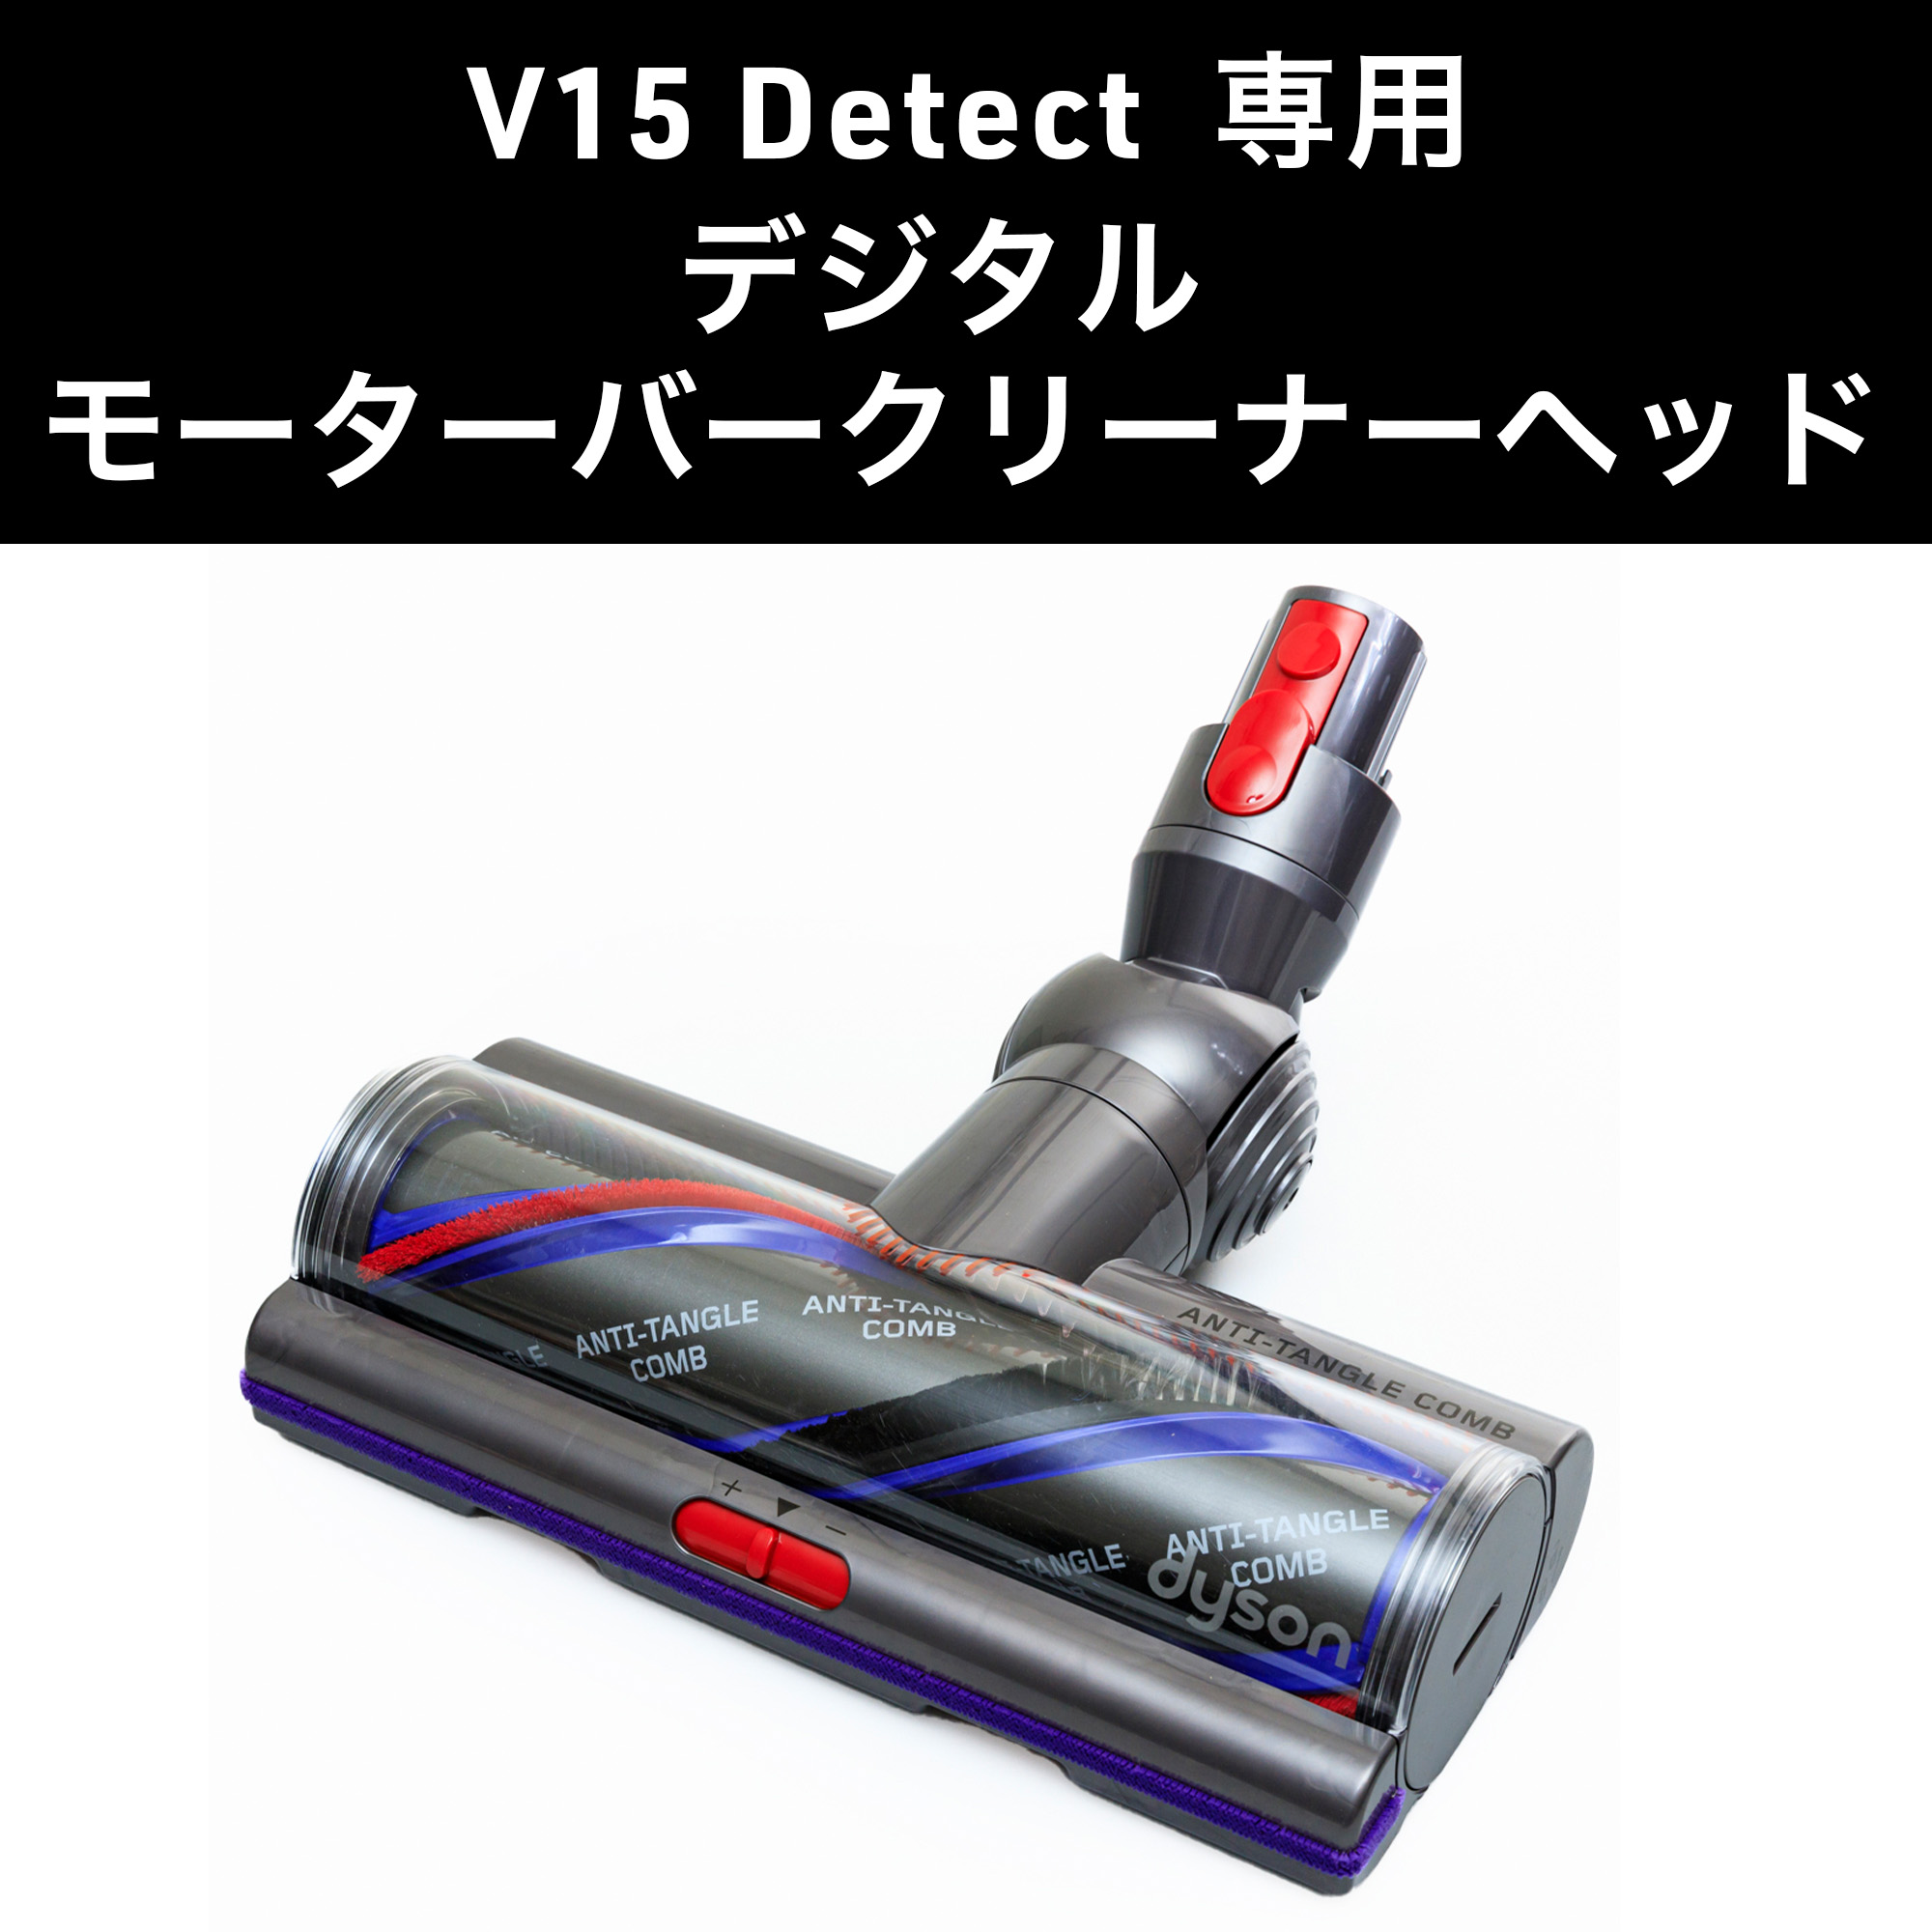 Dyson ダイソン 掃除機 純正 パーツ 返品OK デジタル モーターバークリーナーヘッド V15 Detect 適合 SV22 モデル 部品 交換